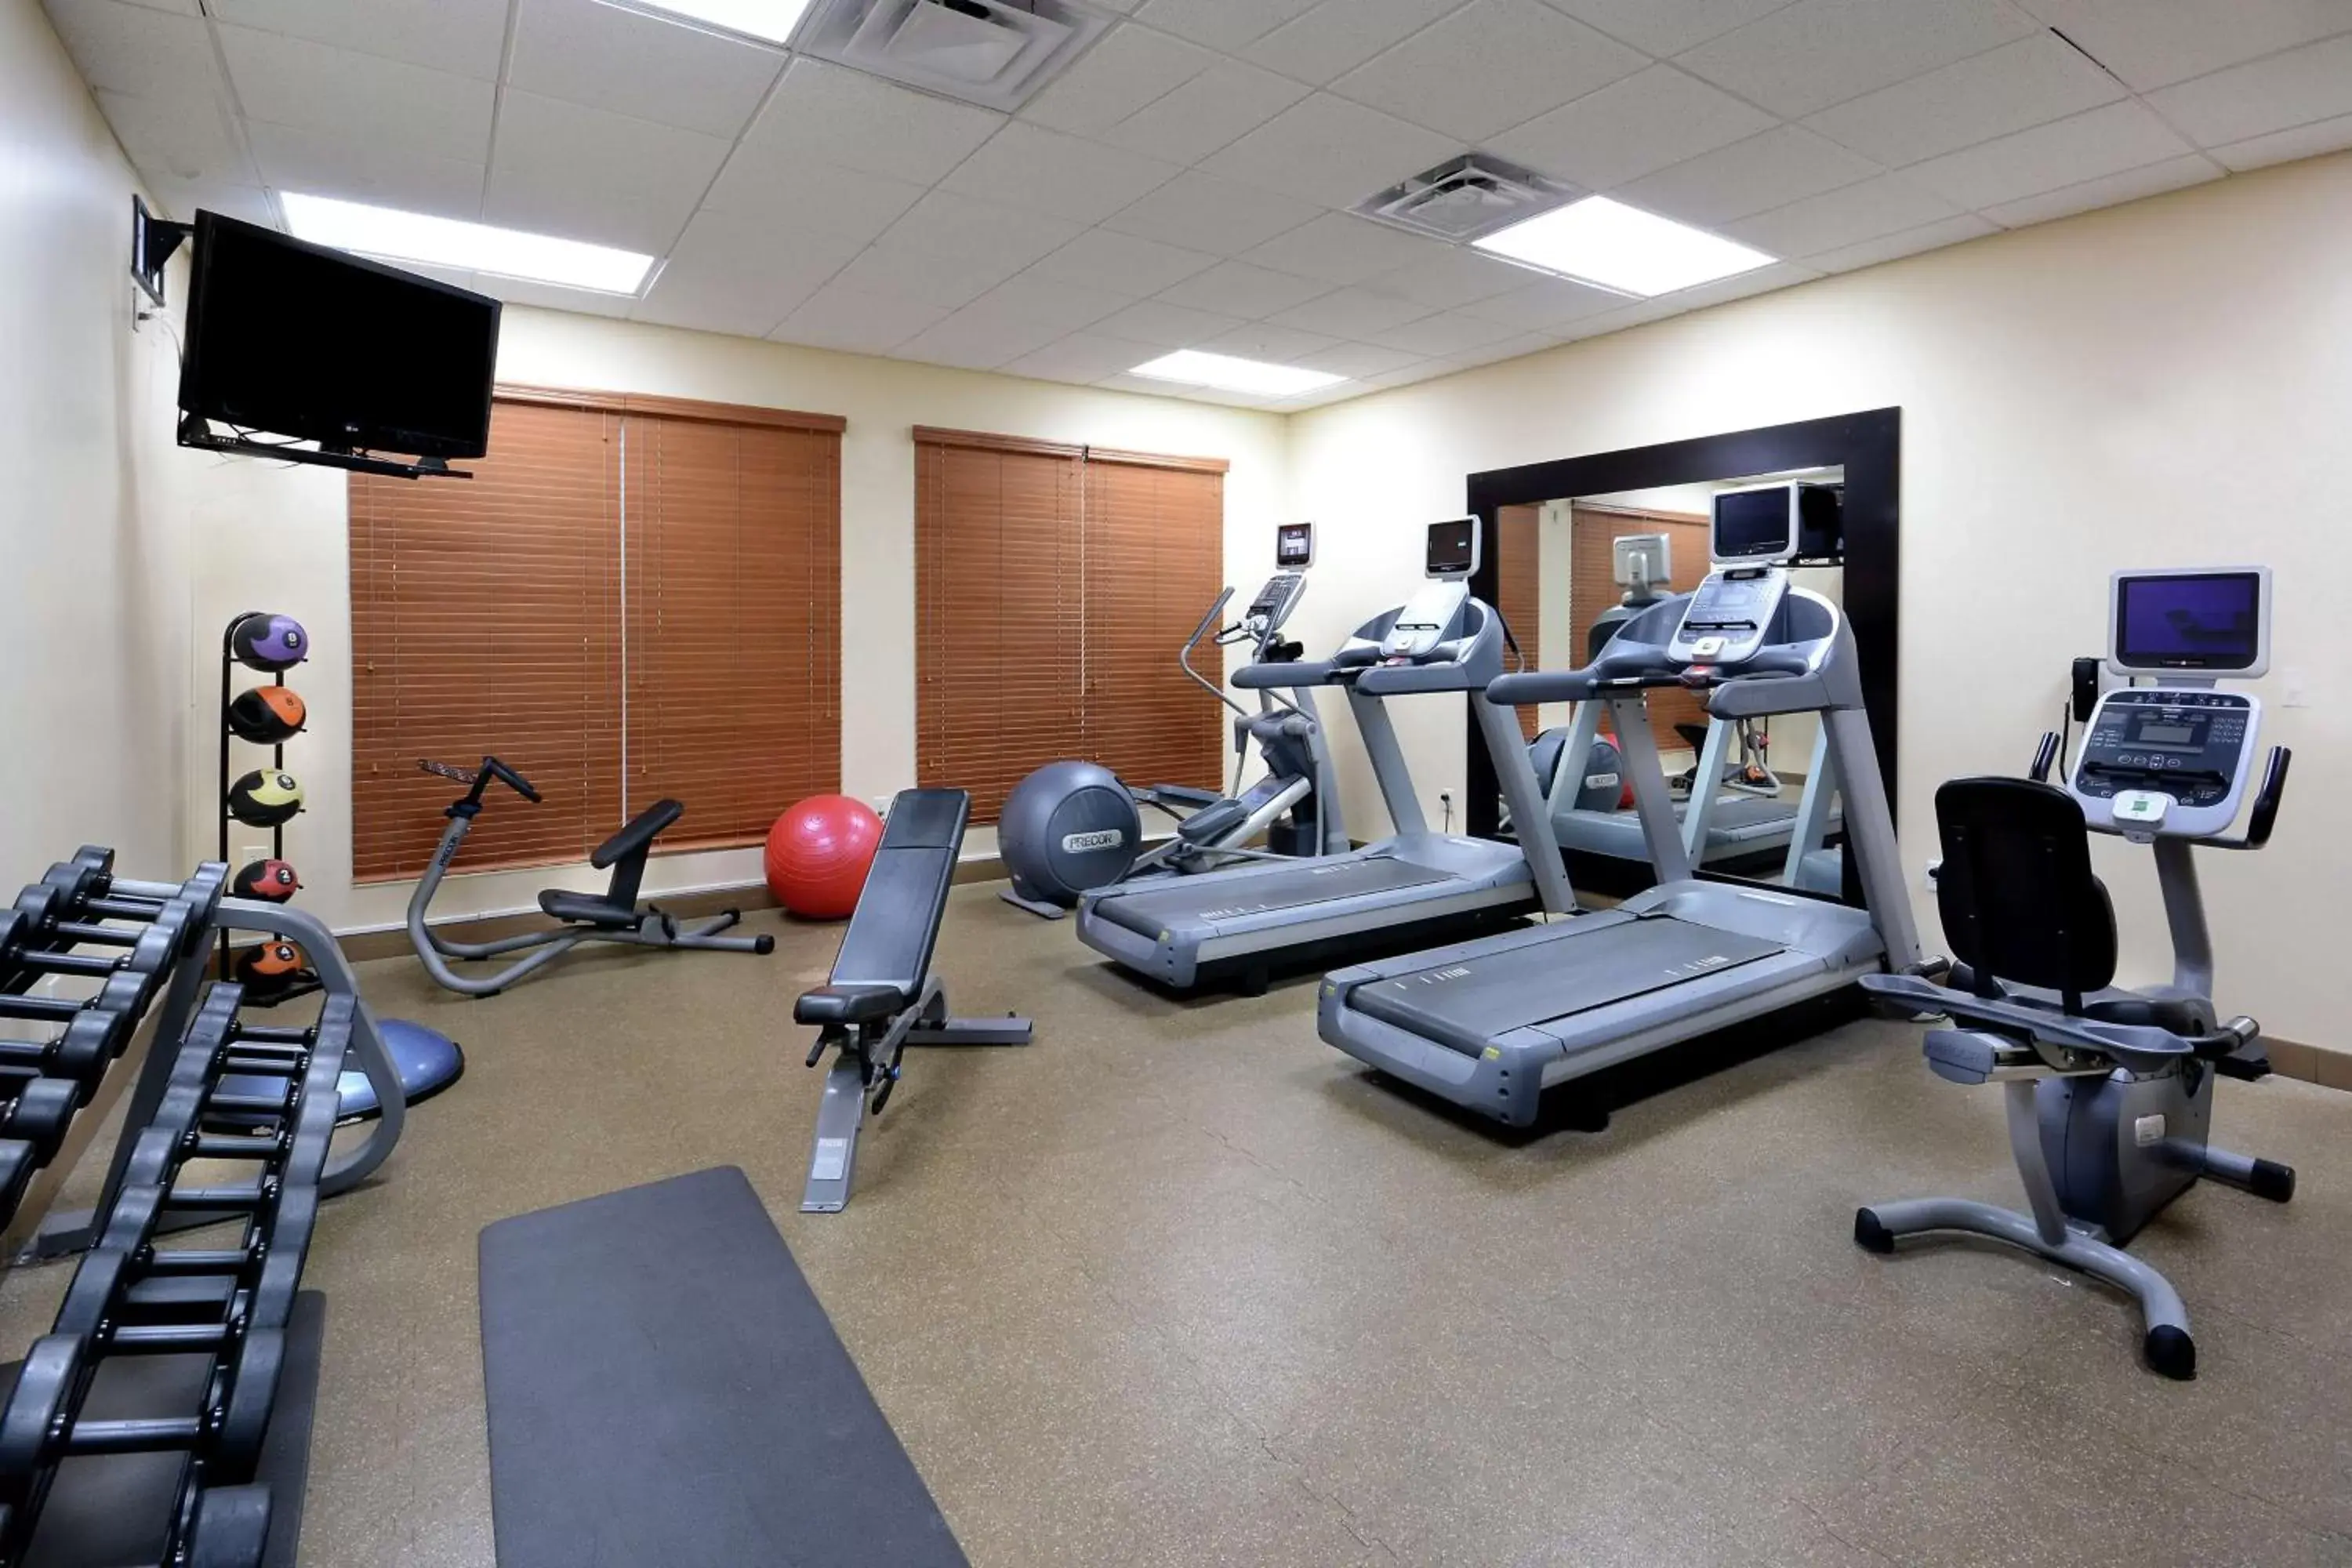 Fitness centre/facilities, Fitness Center/Facilities in Hilton Garden Inn Greensboro